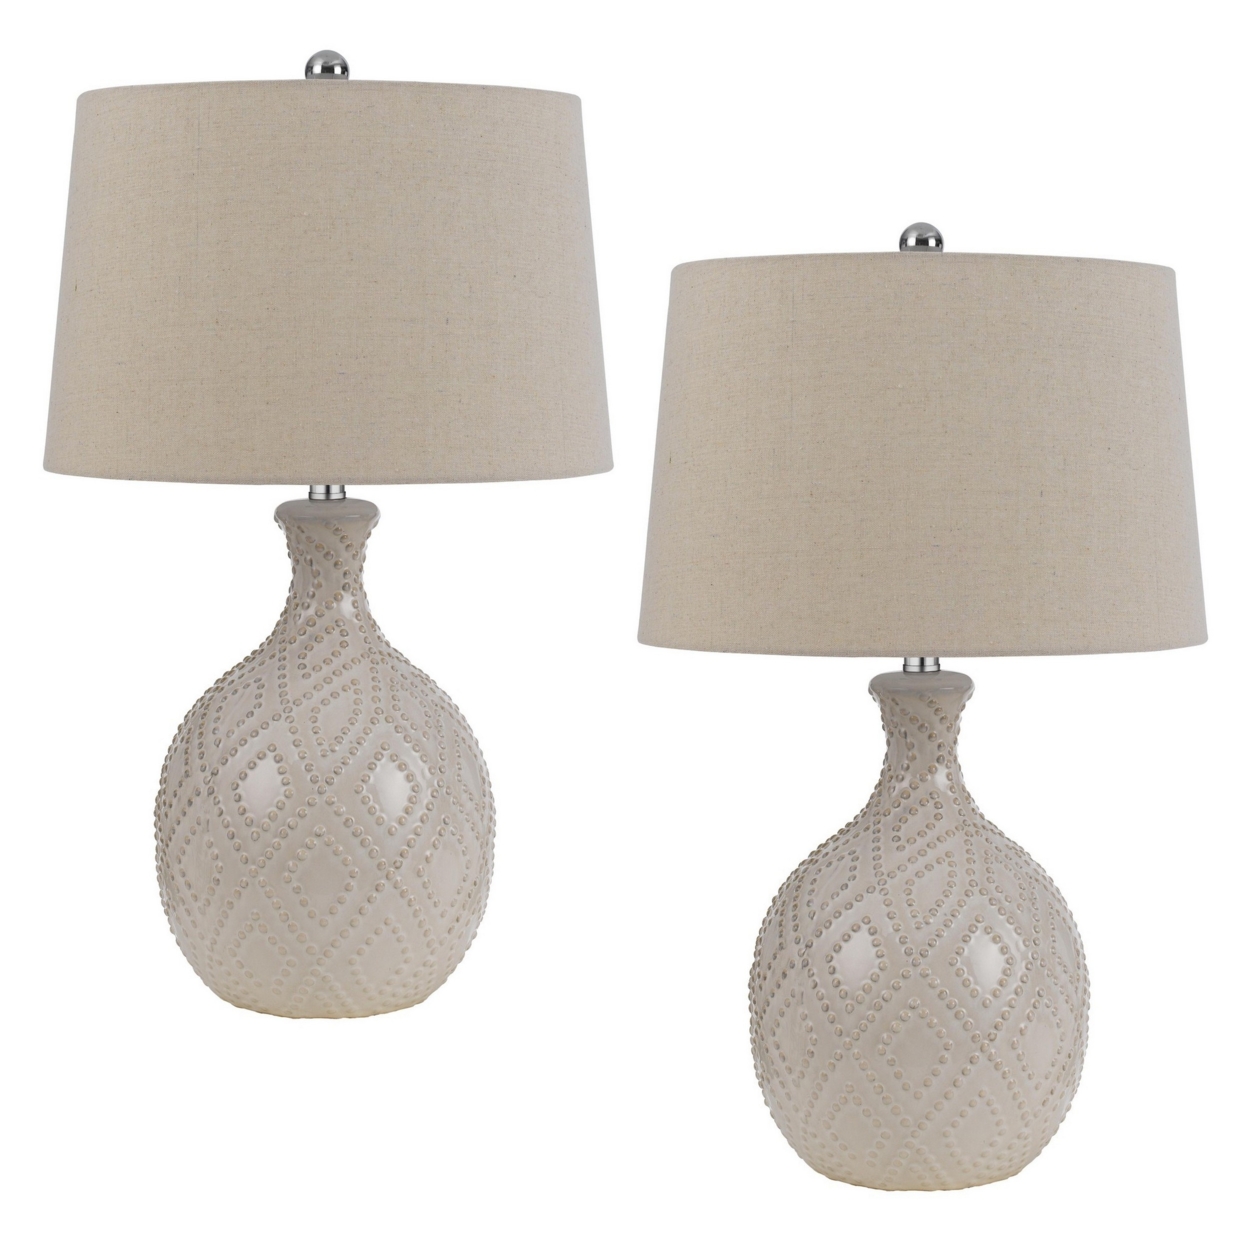 27 Inch Table Lamp Set Of 2, Ceramic Base, Hardback Fabric Shade, Ivory- Saltoro Sherpi